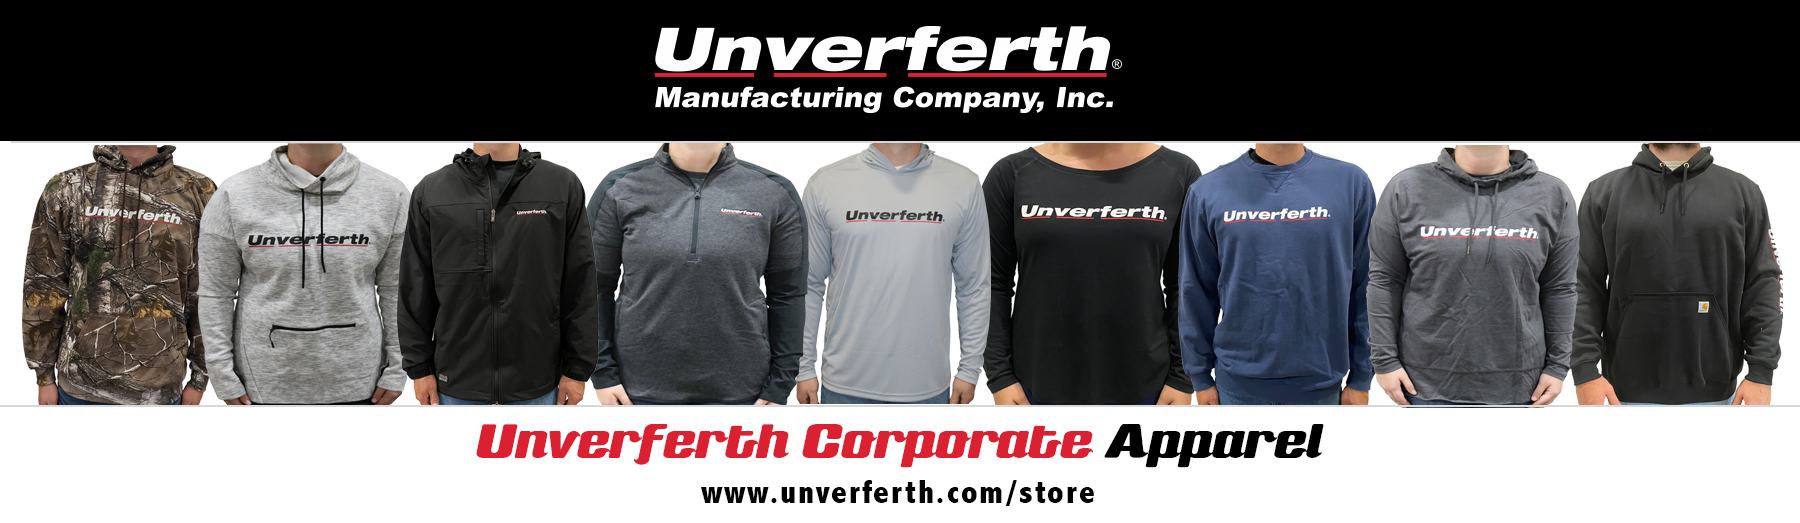 Unverferth Merchandise Website